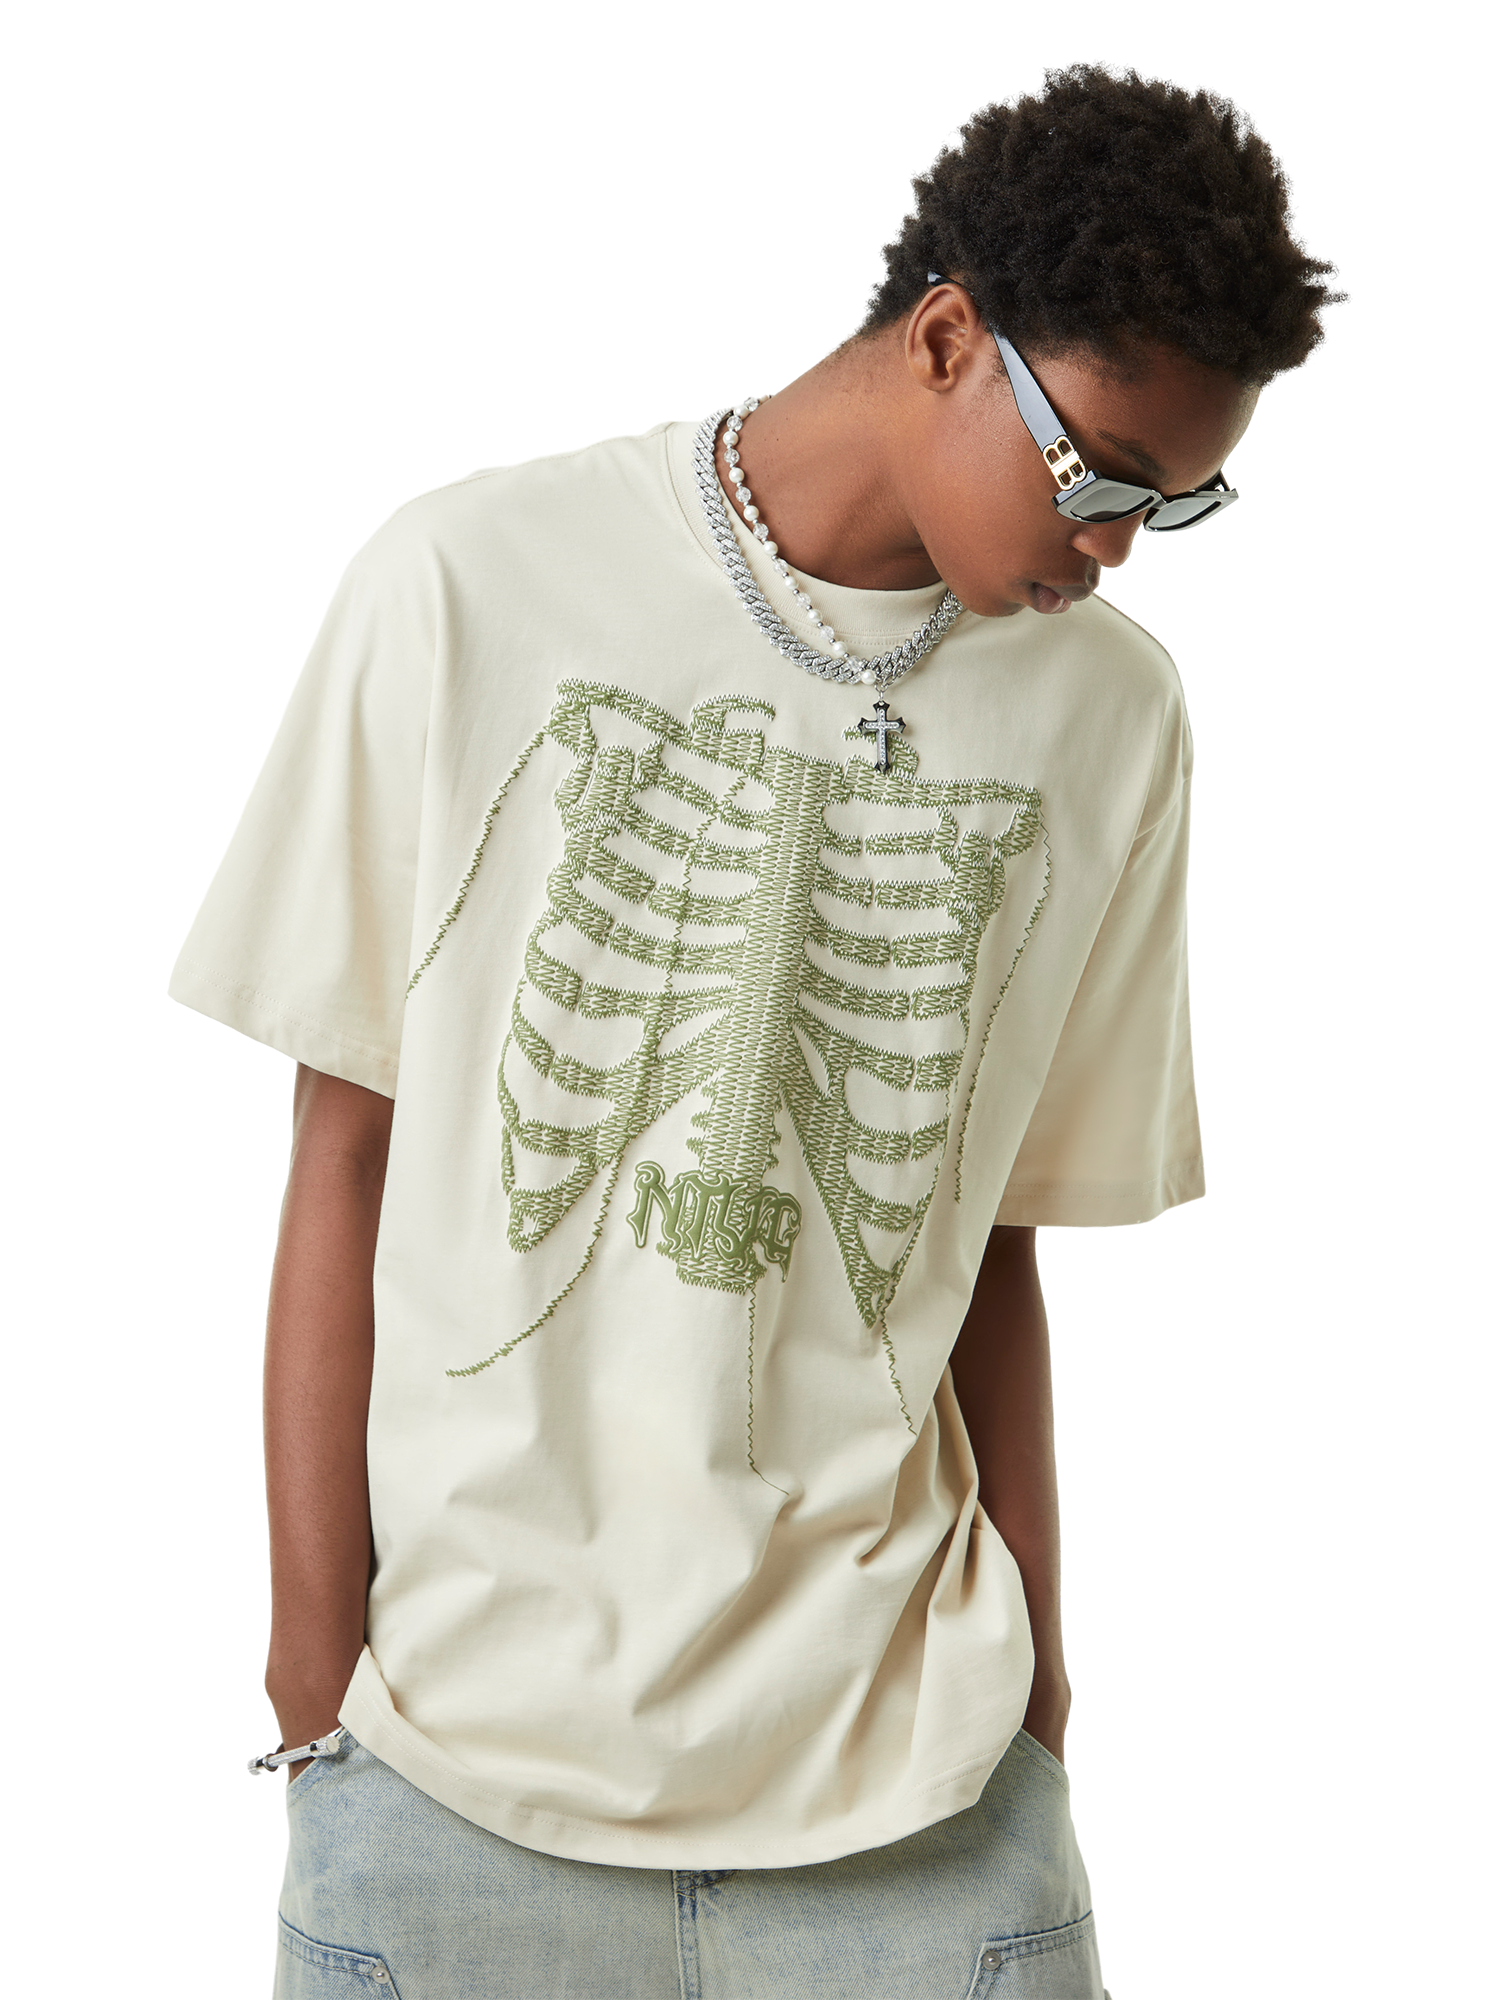 Thesupermade American Street Fashion Skull Print T-shirt